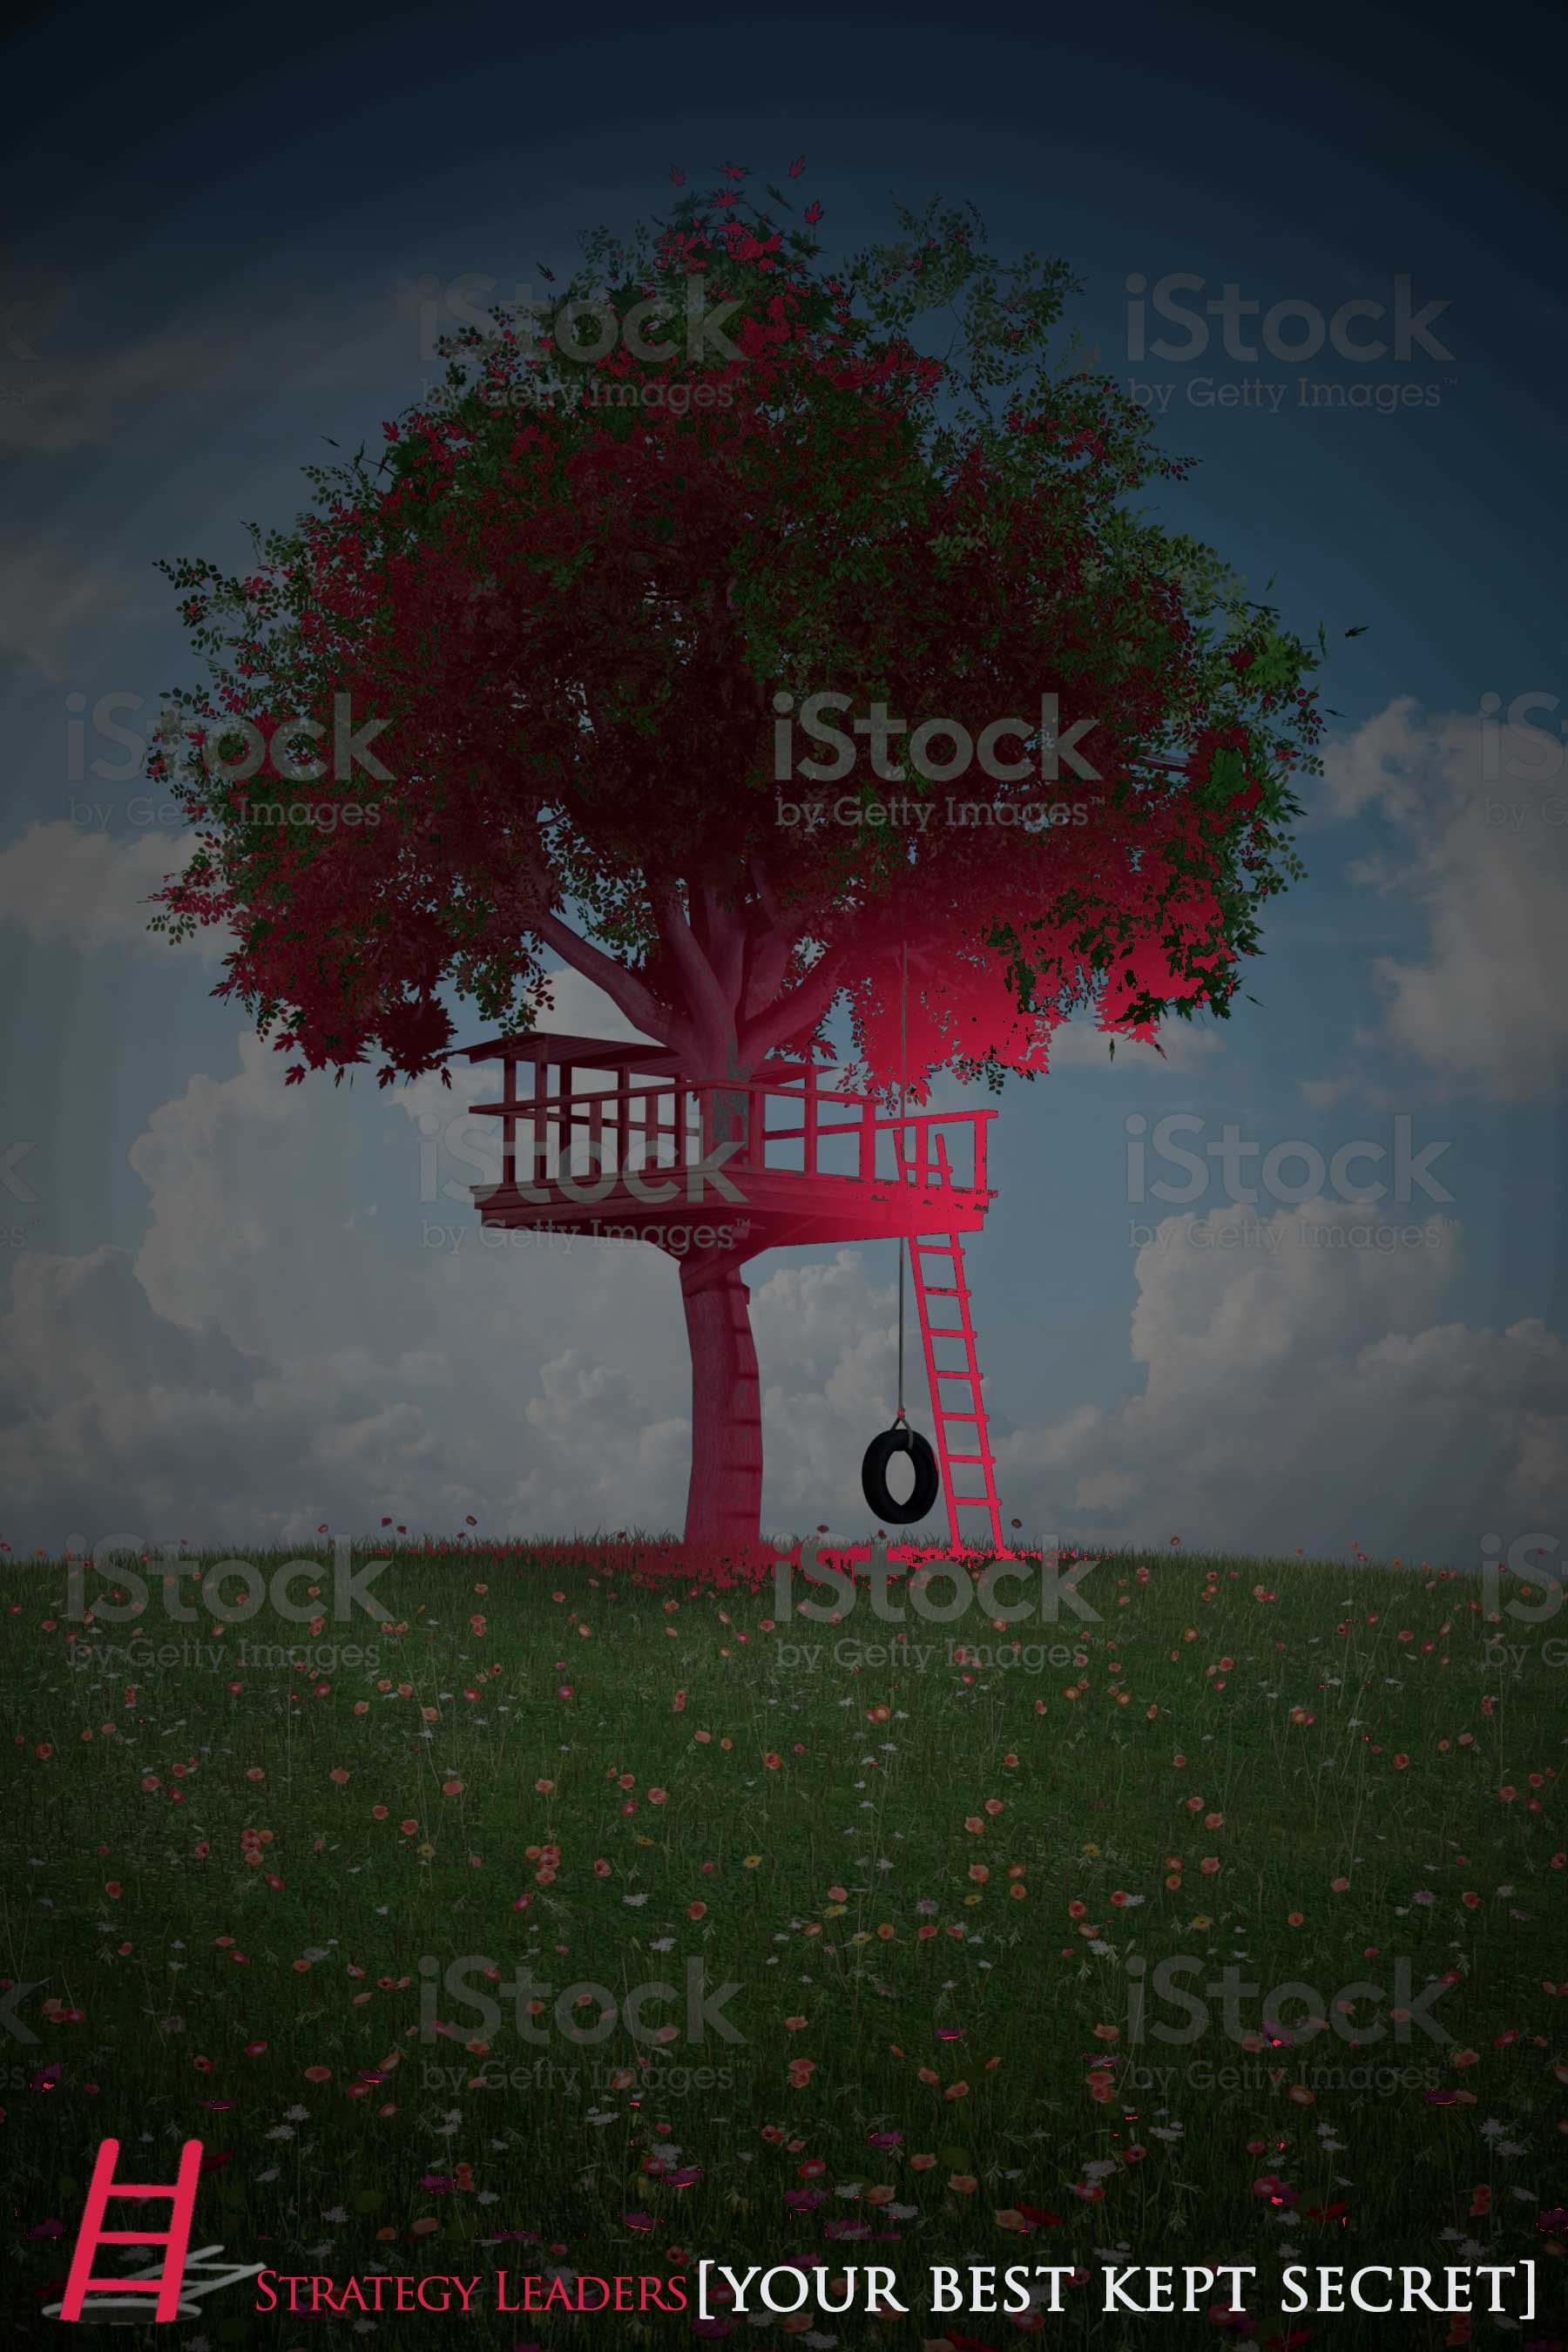 ad-best-kept-secret-tree-house